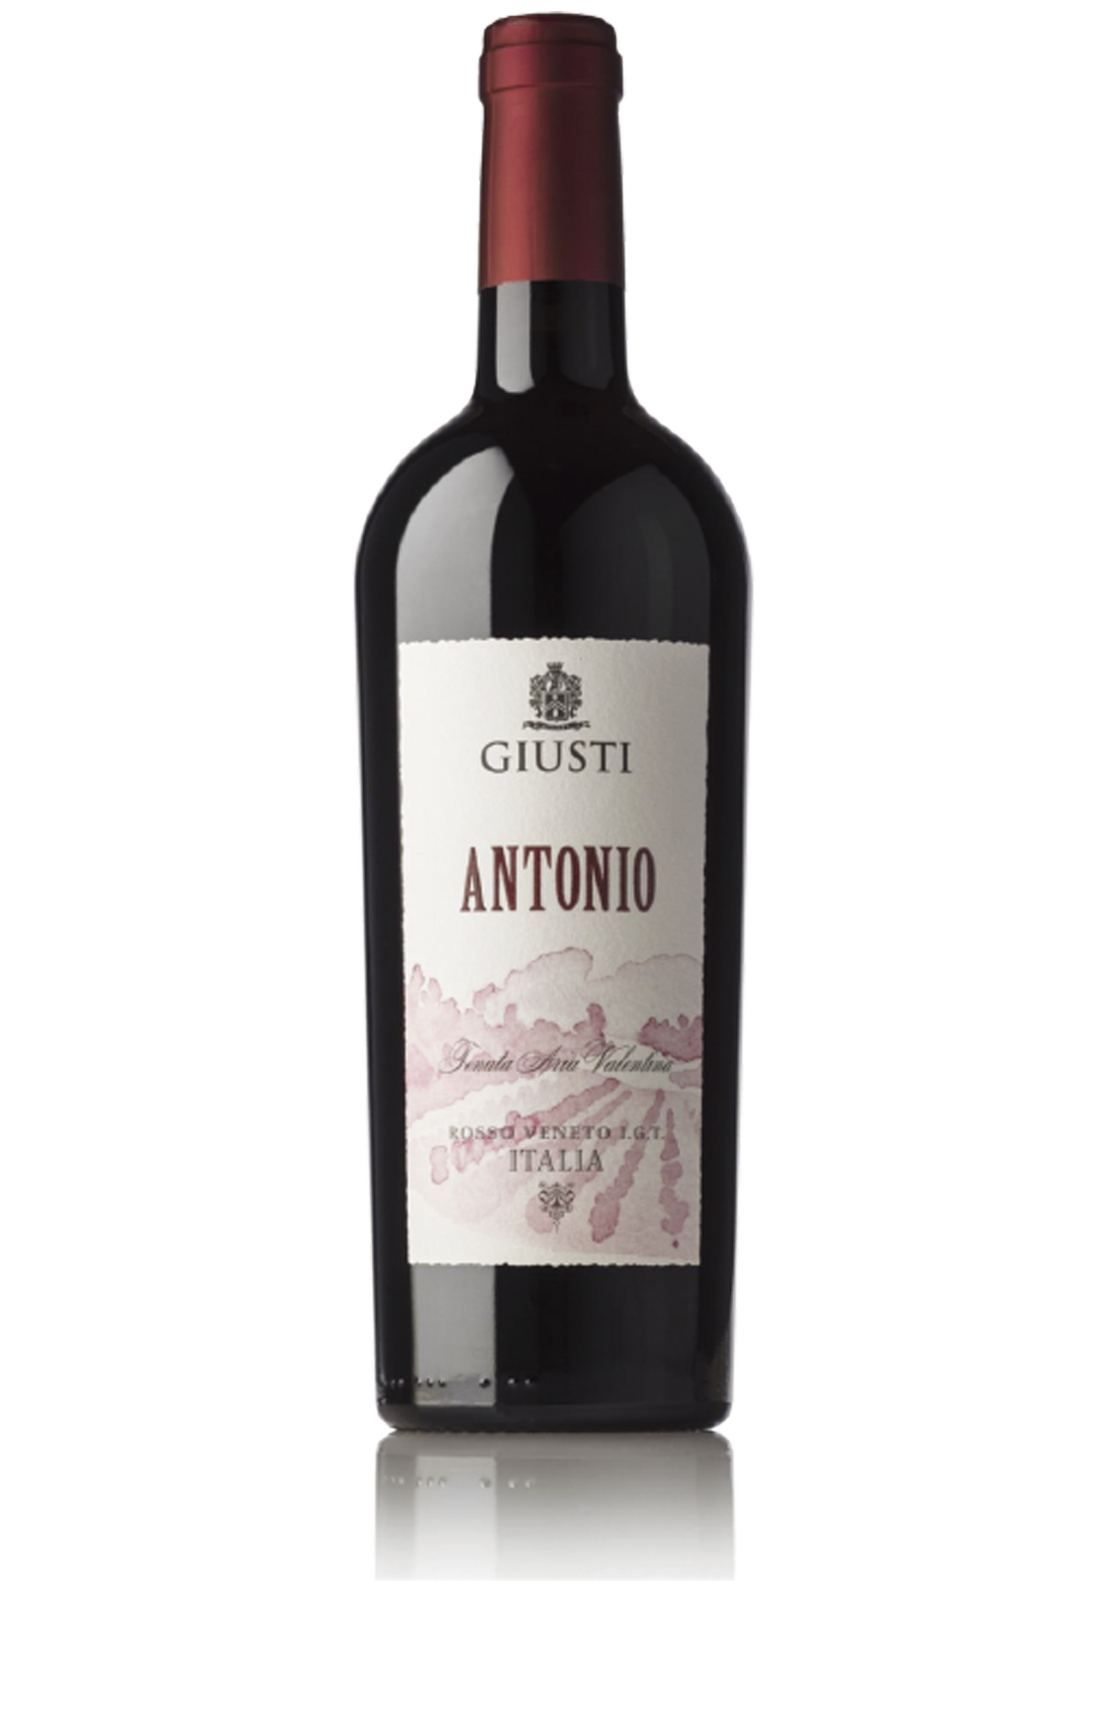  義大利君帝酒莊 安東尼紅酒 ANTONIO ROSSO DEL VENETO IGT (義大利紅酒)